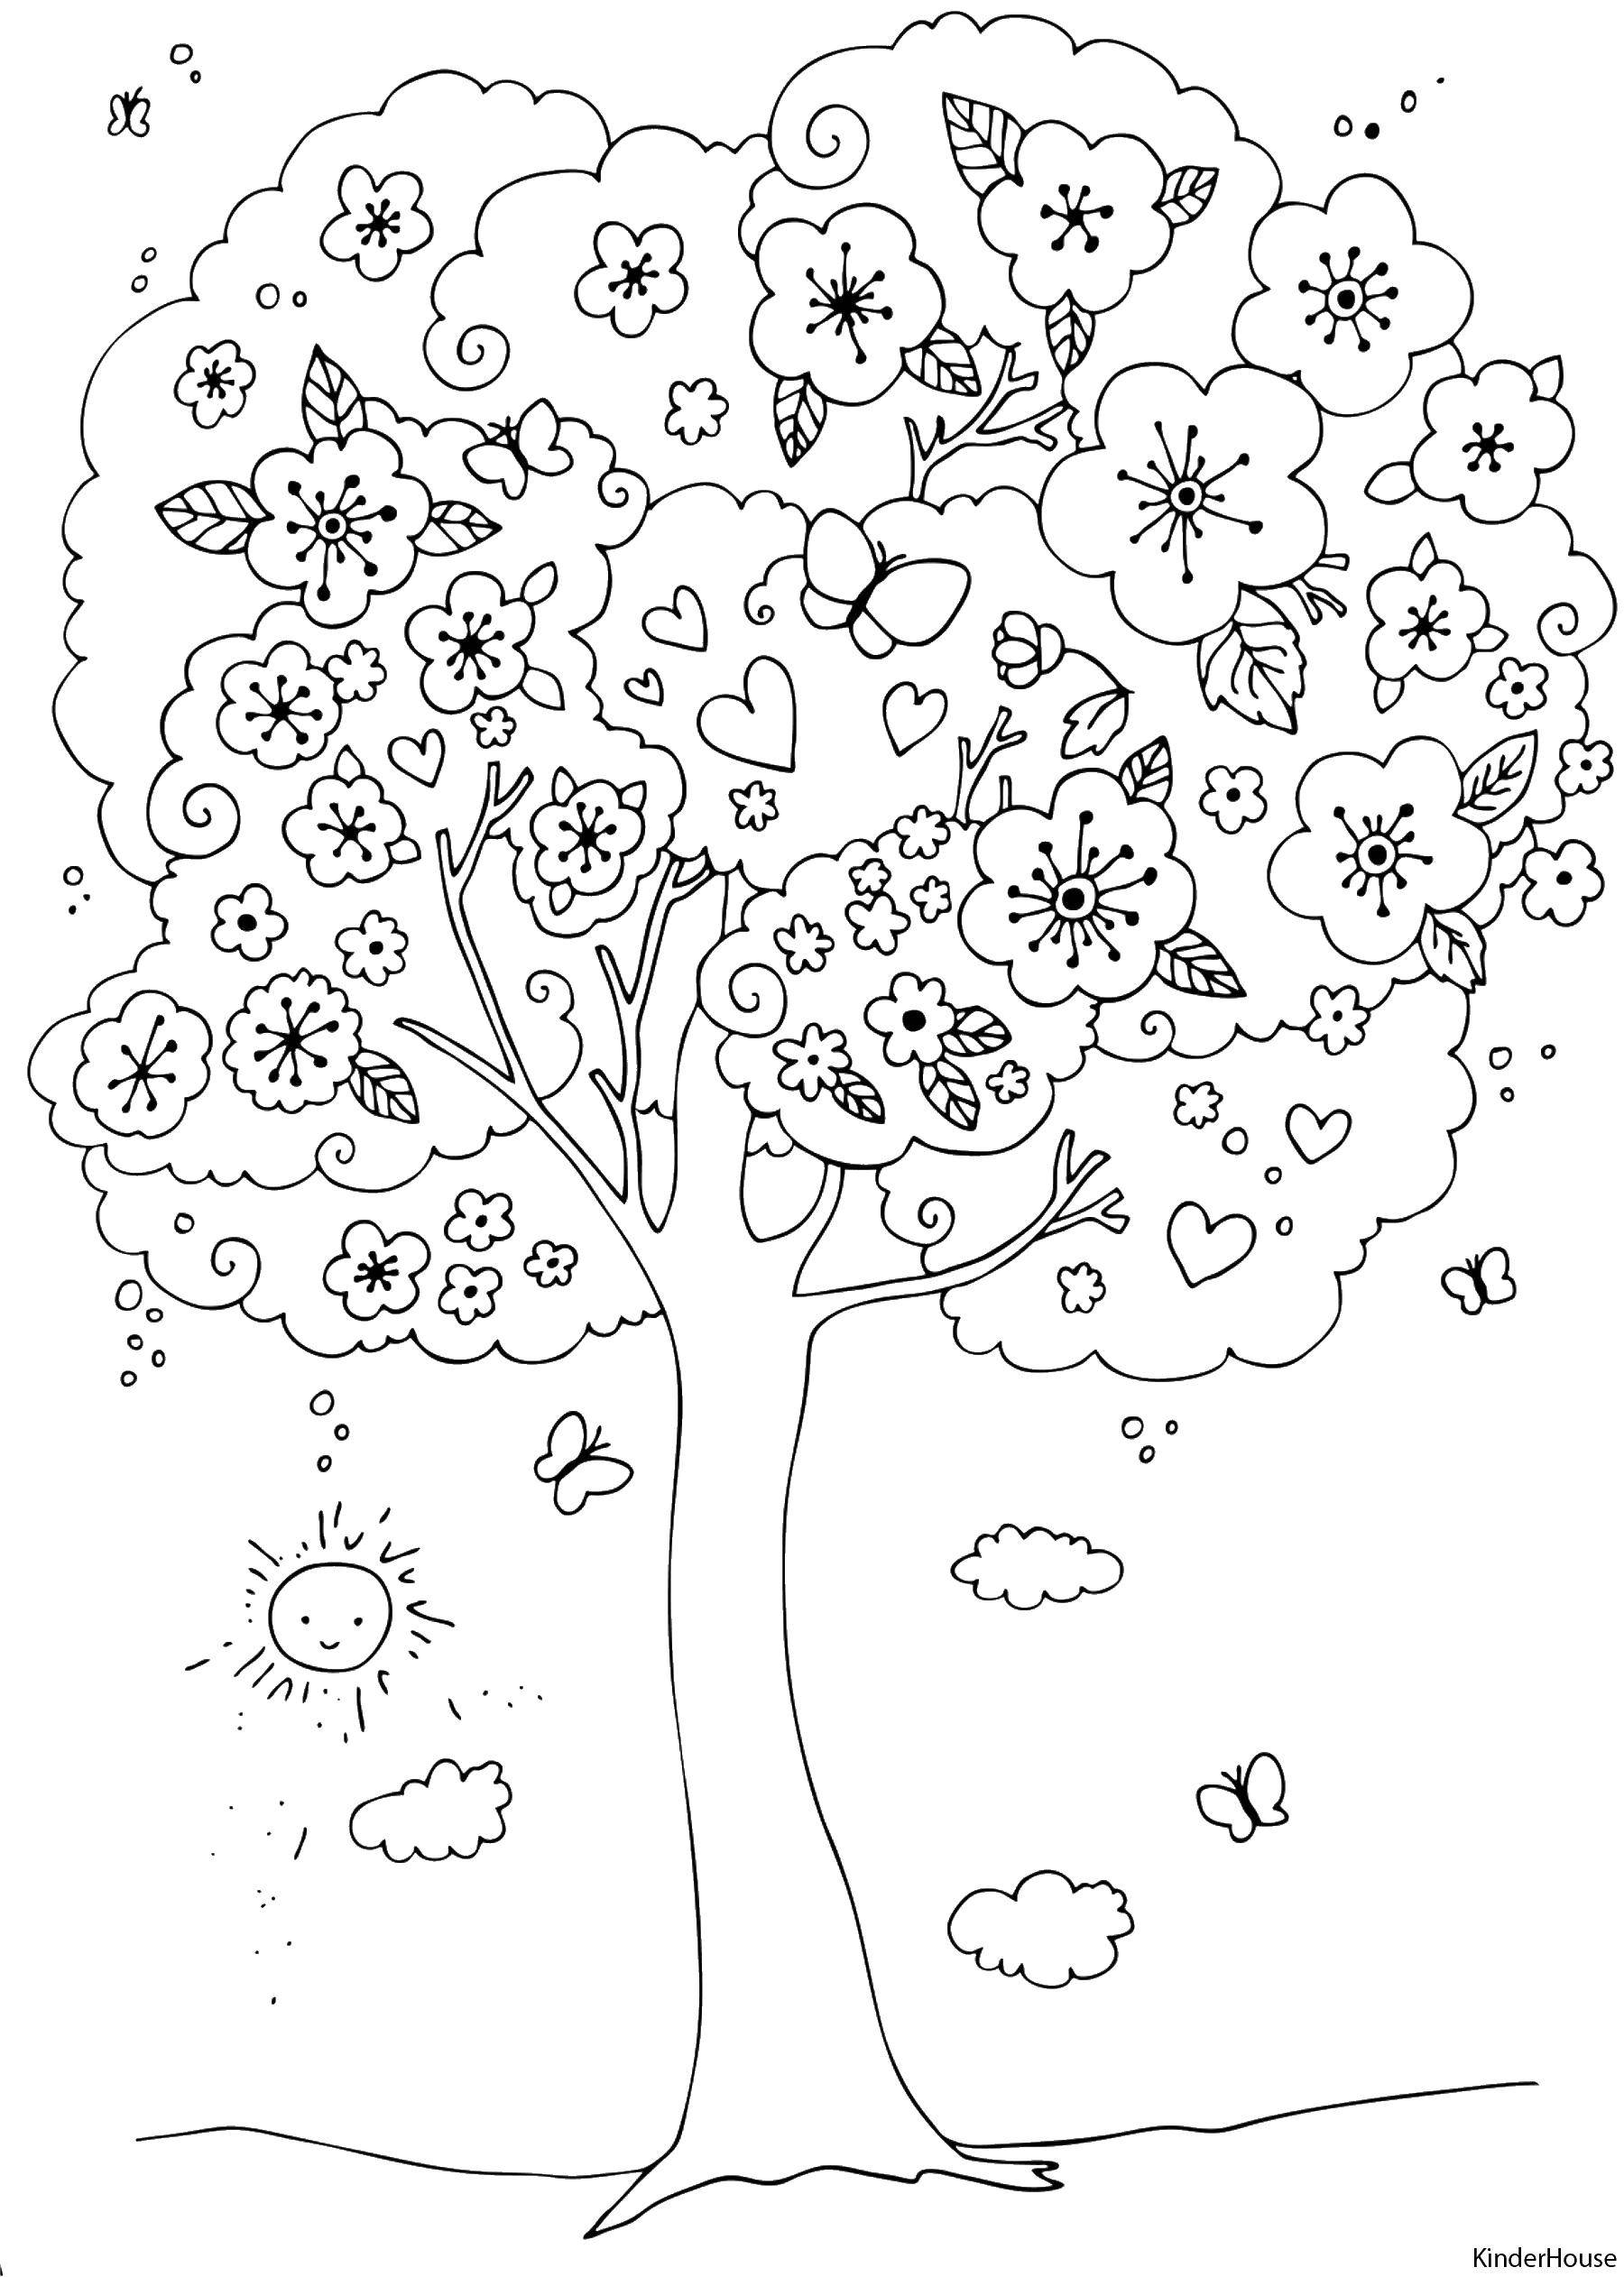 Название: Раскраска Весеннее деревце. Категория: весна. Теги: Весна, цветы, тепло.